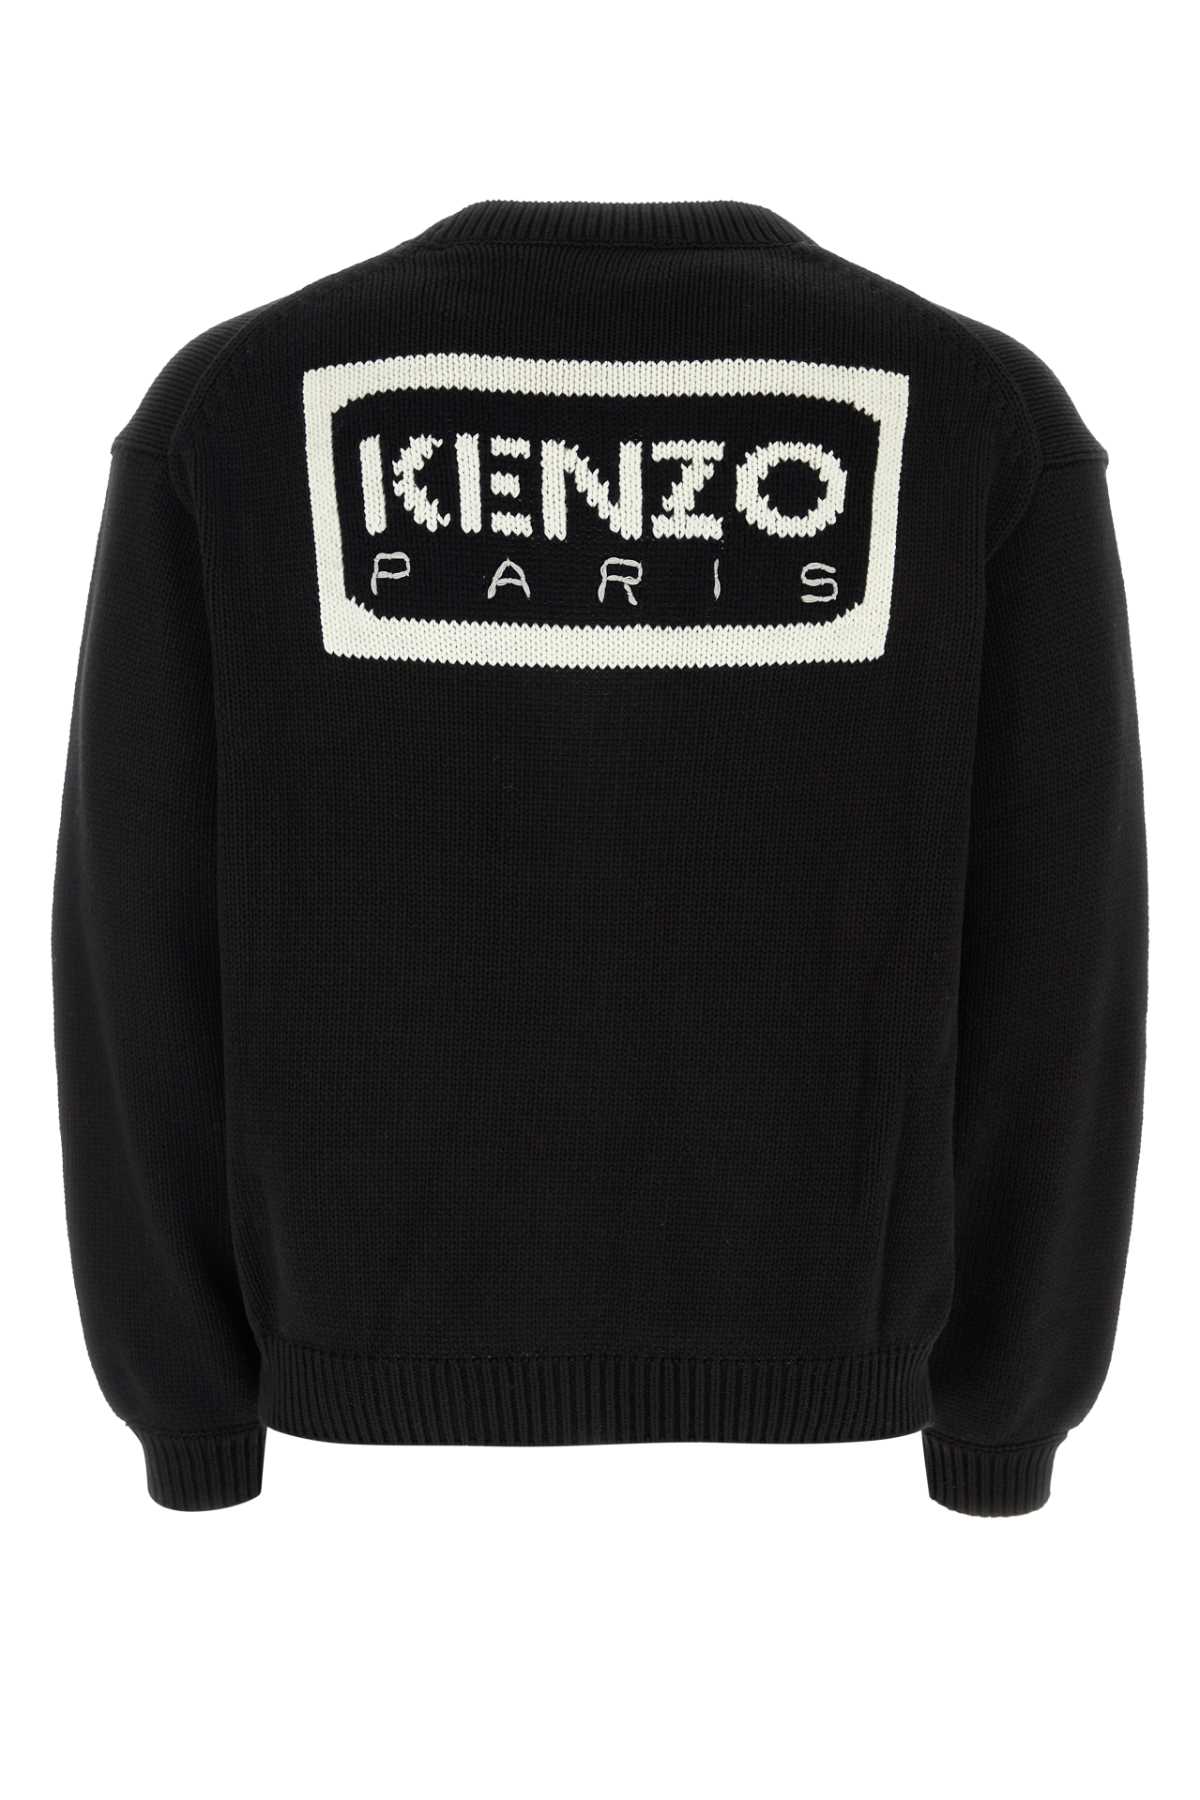 Kenzo Black Stretch Cotton Blend Cardigan